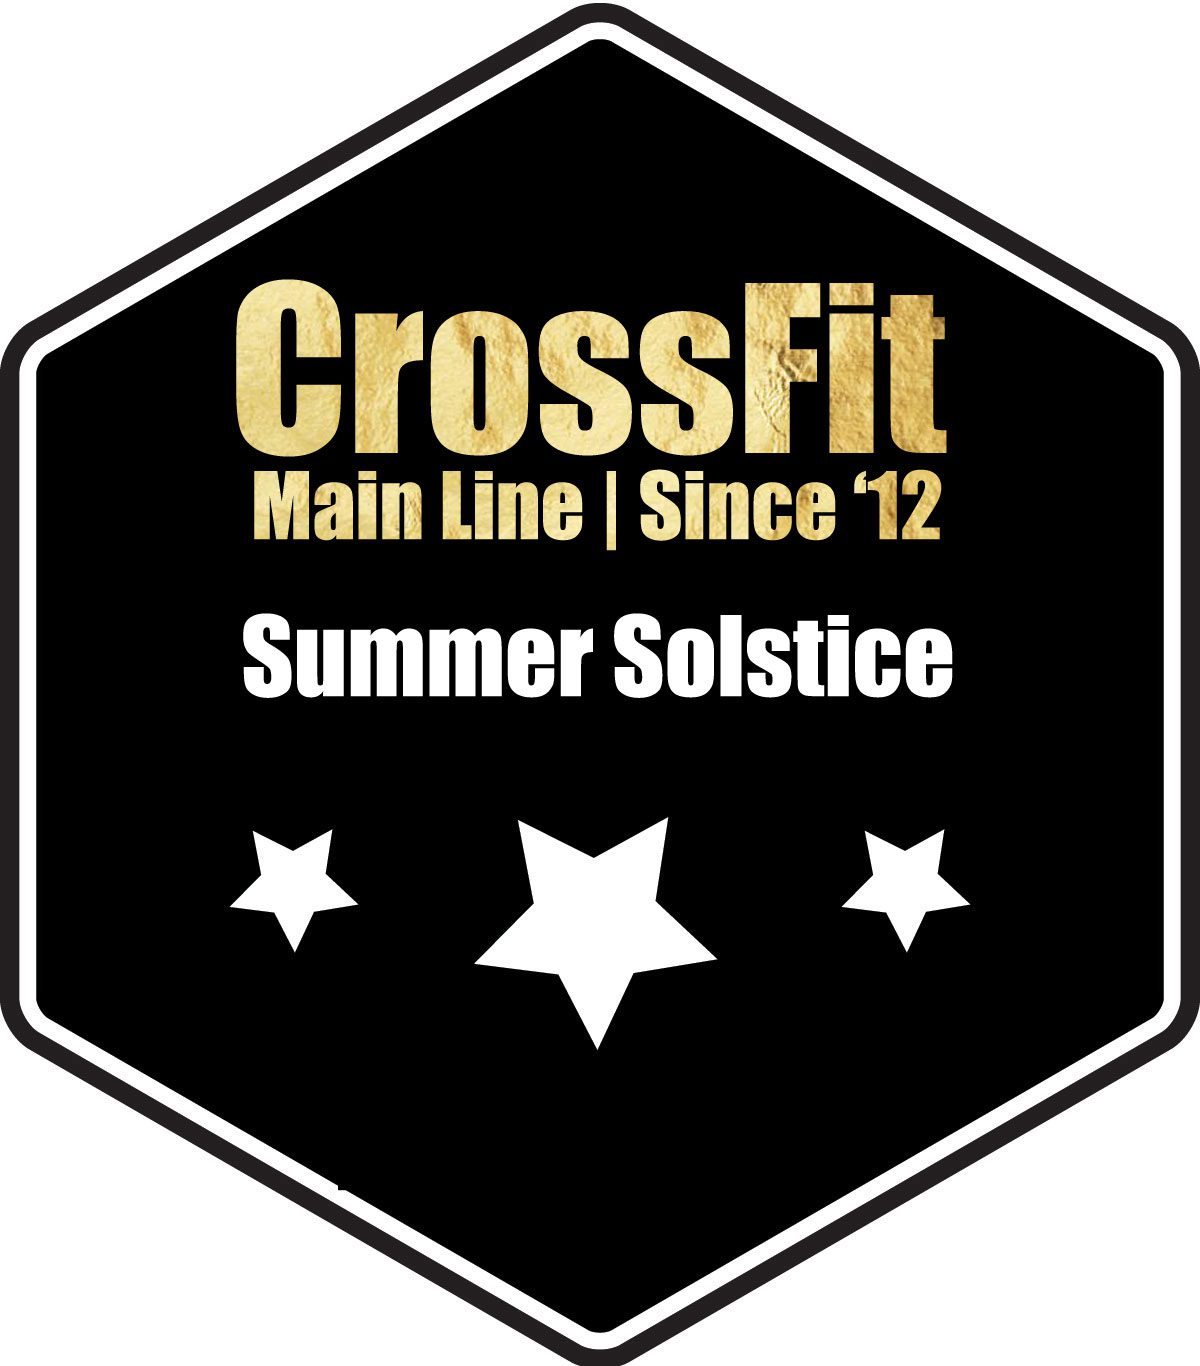 Wednesday 6.20.18 CrossFit